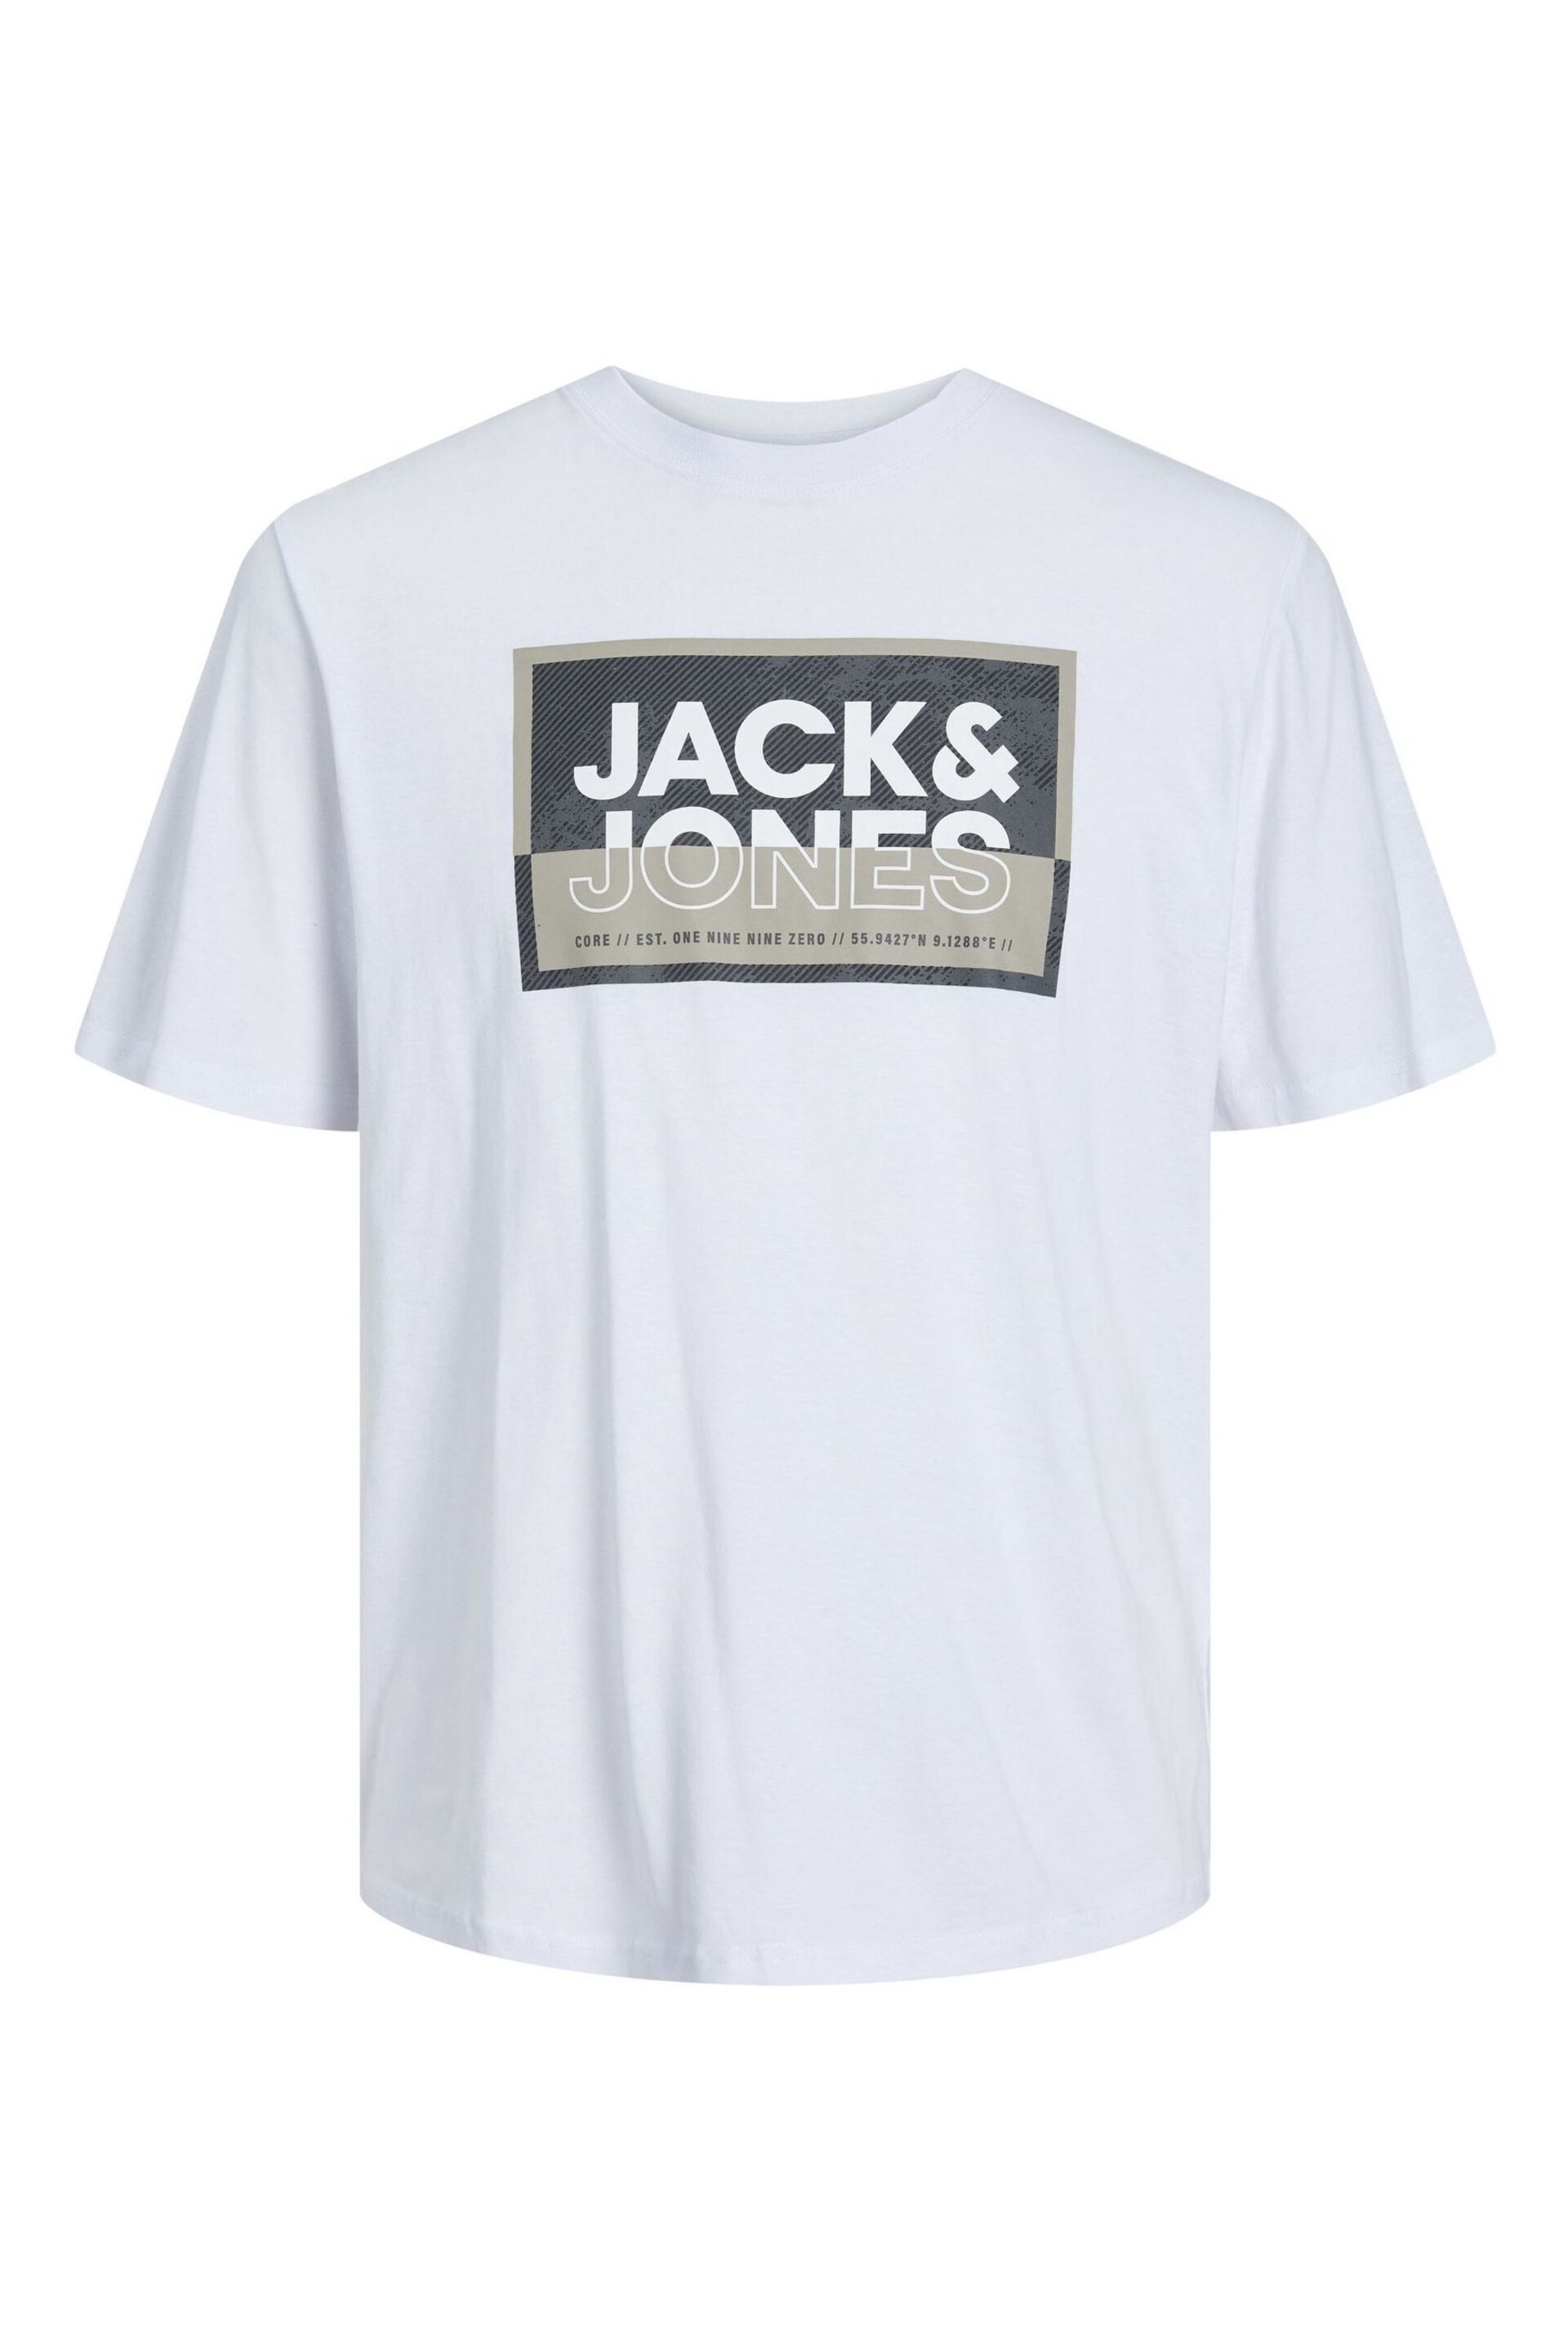 JACK & JONES JUNIOR Blue Crew Neck T-Shirts Pack - Image 2 of 3